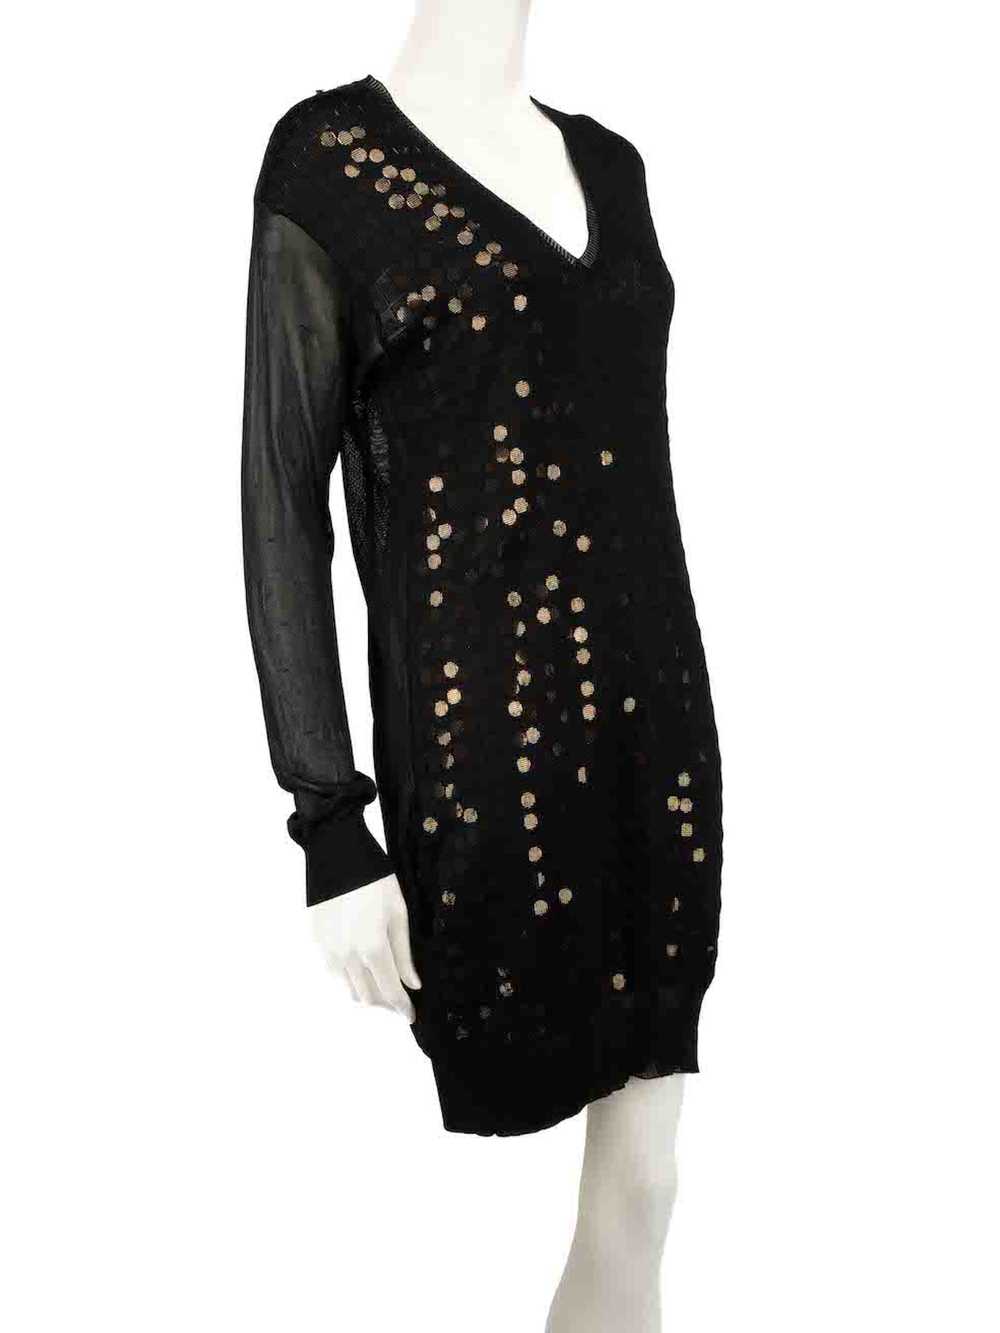 Stella McCartney Black Sequin Knit Jumper Dress - image 2